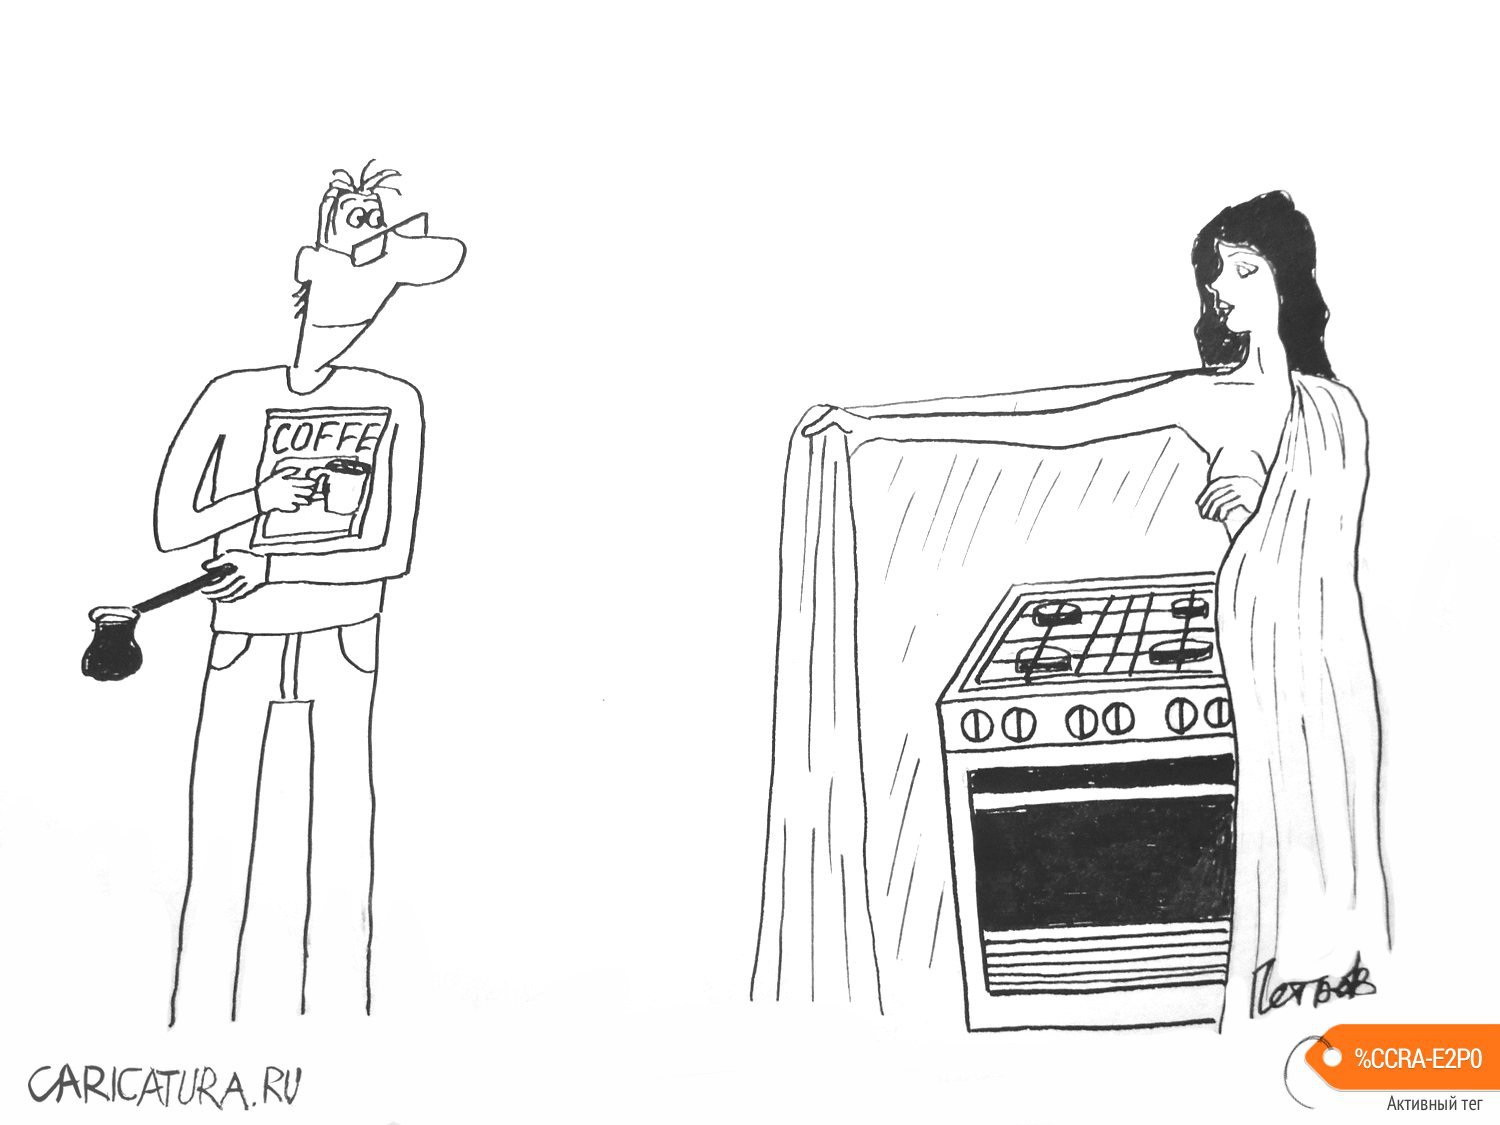 Карикатура "Женщина с покрывалом", Александр Петров